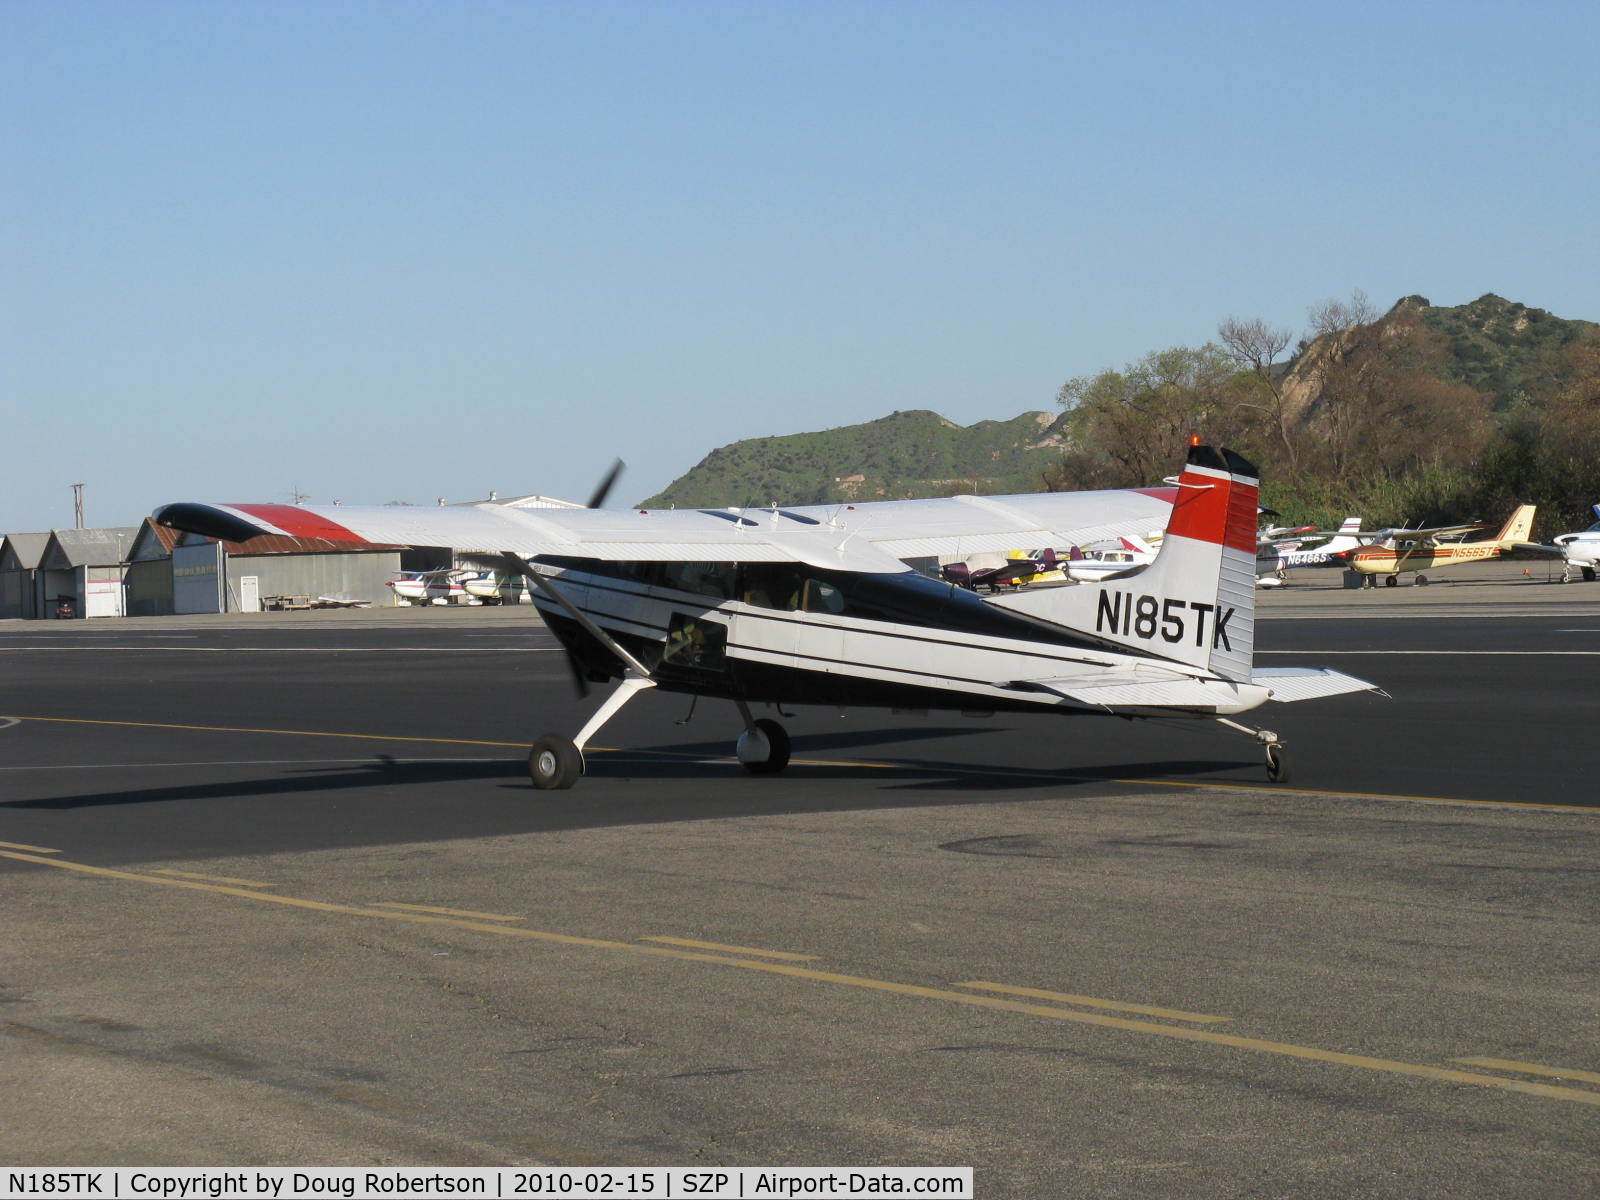 N185TK, 1981 Cessna A185F Skywagon 185 C/N 18504366, 1981 Cessna A185F SKYWAGON II, Continental IO-520-D 300 Hp, taxi